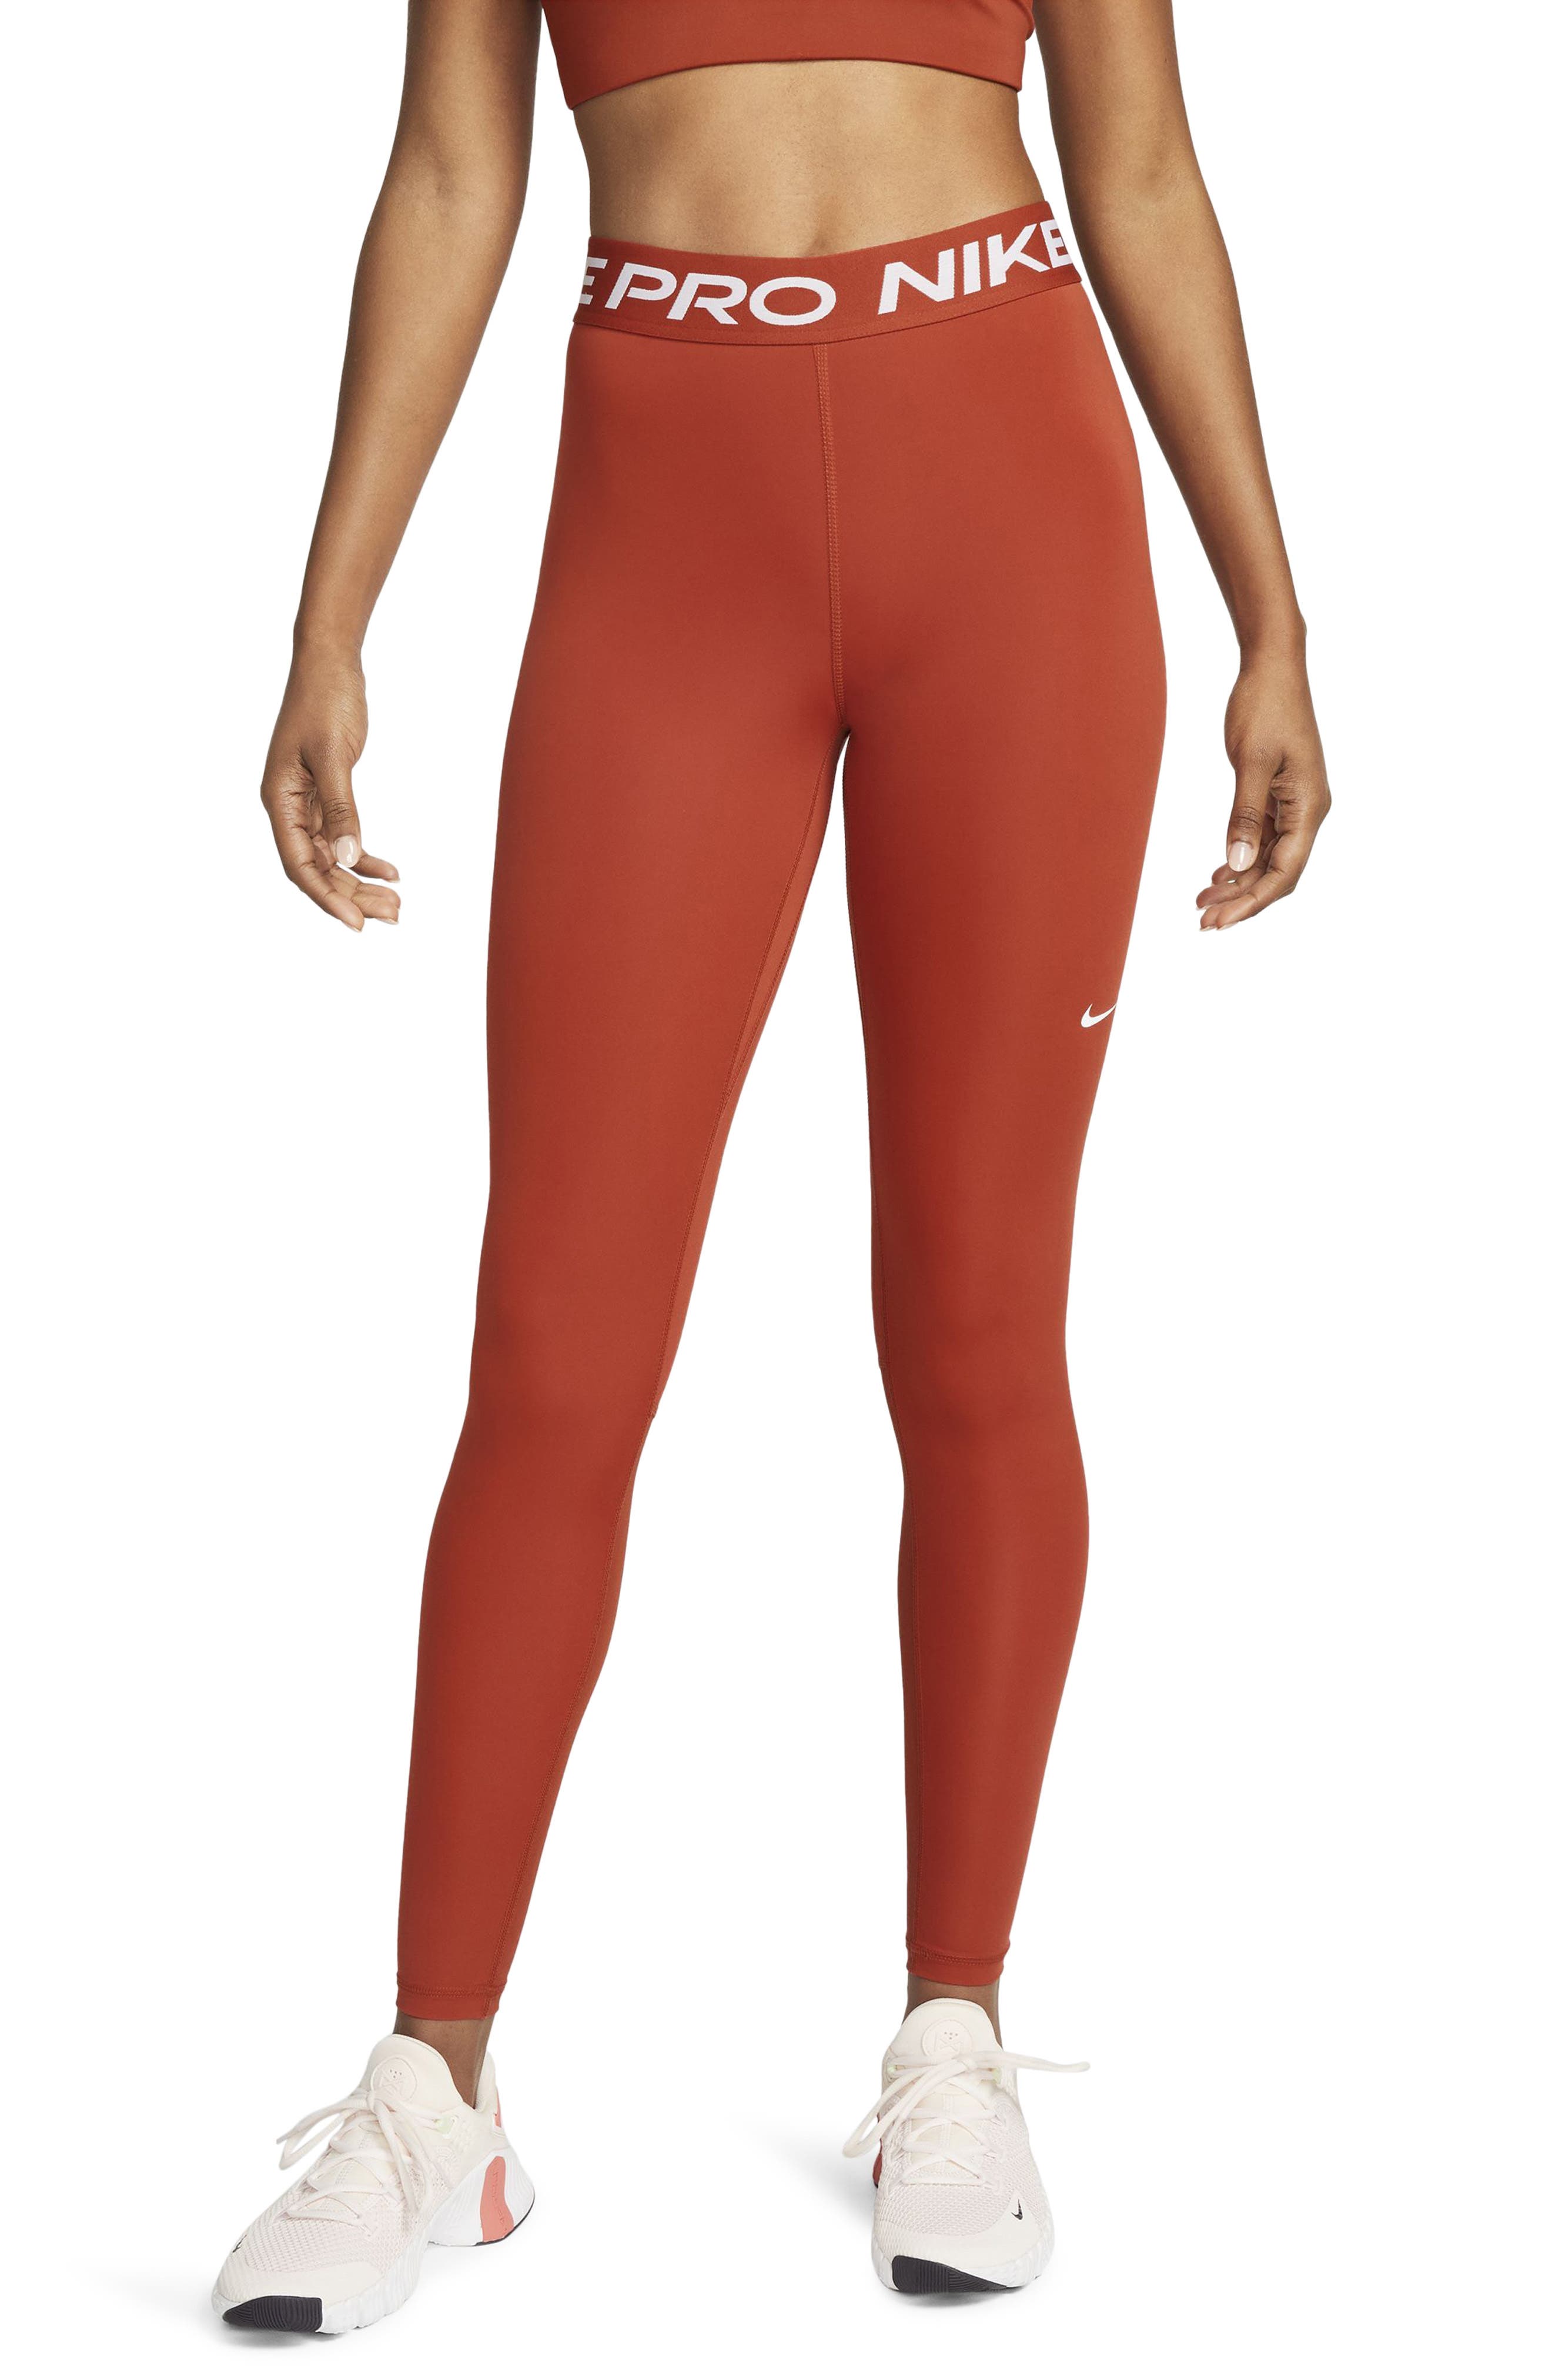 Nike Pro Intertwist Women's Mesh Leggings and top Blue Pink 2 piece